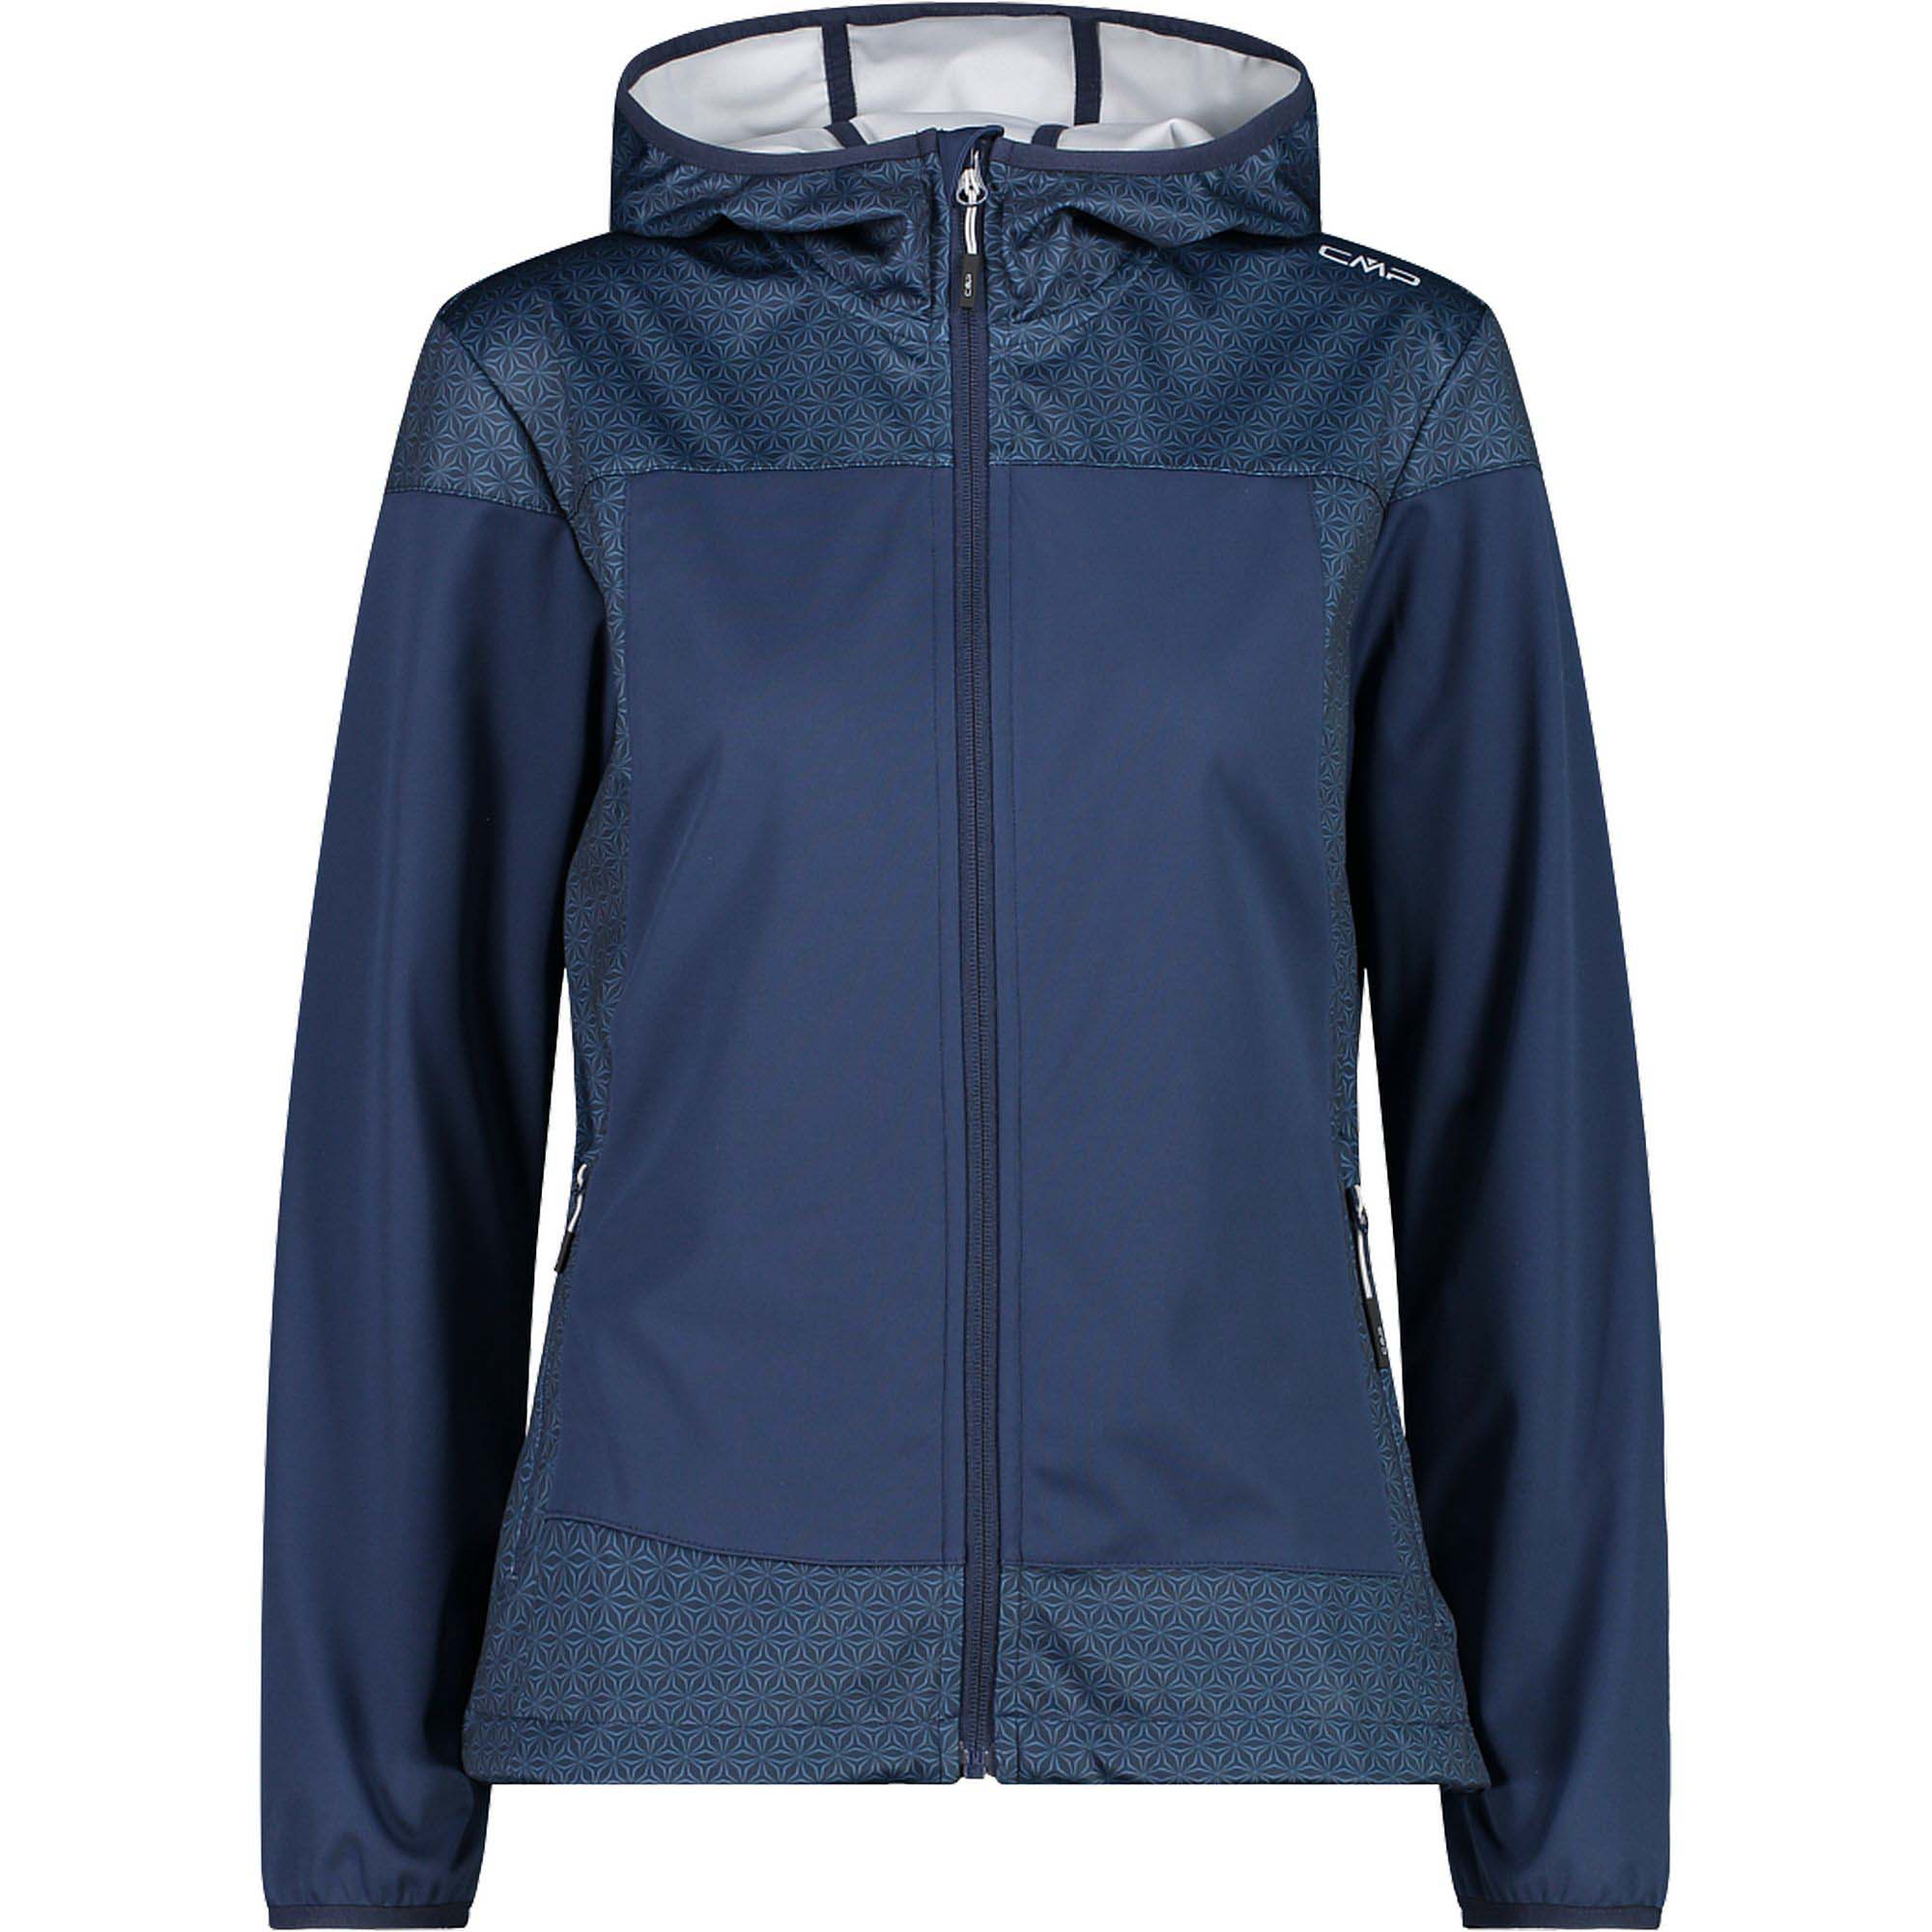 CMP Jacket Fix Hood 32A5136 Softshelljacken blue jetzt bei Berger kaufen